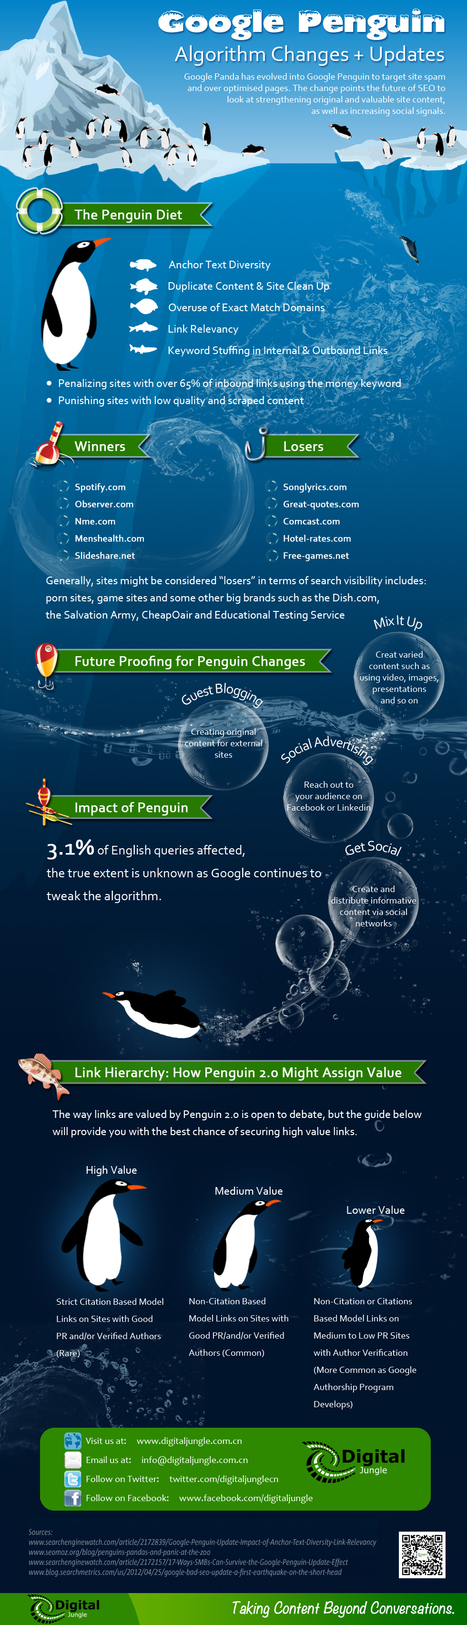 [INFOGRAPHIC] Google Penguin Update | Digital Jungle | The MarTech Digest | Scoop.it